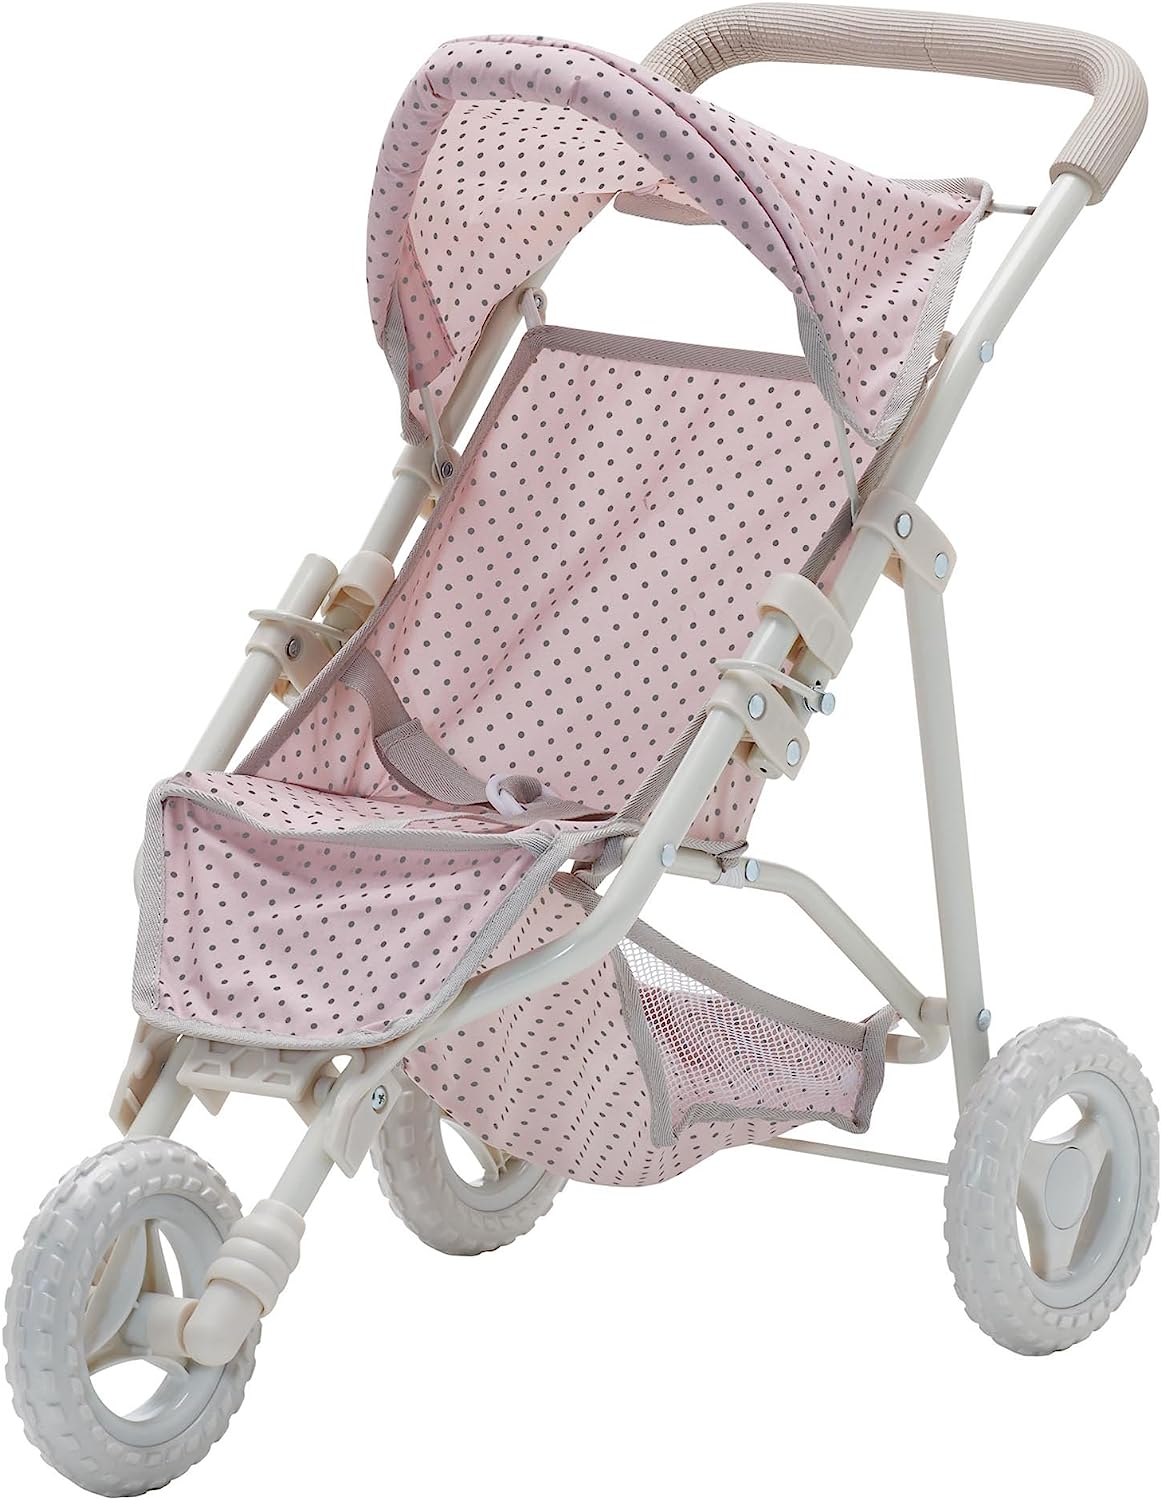 Olivia's Little World Baby Doll Jogging Stroller in pink